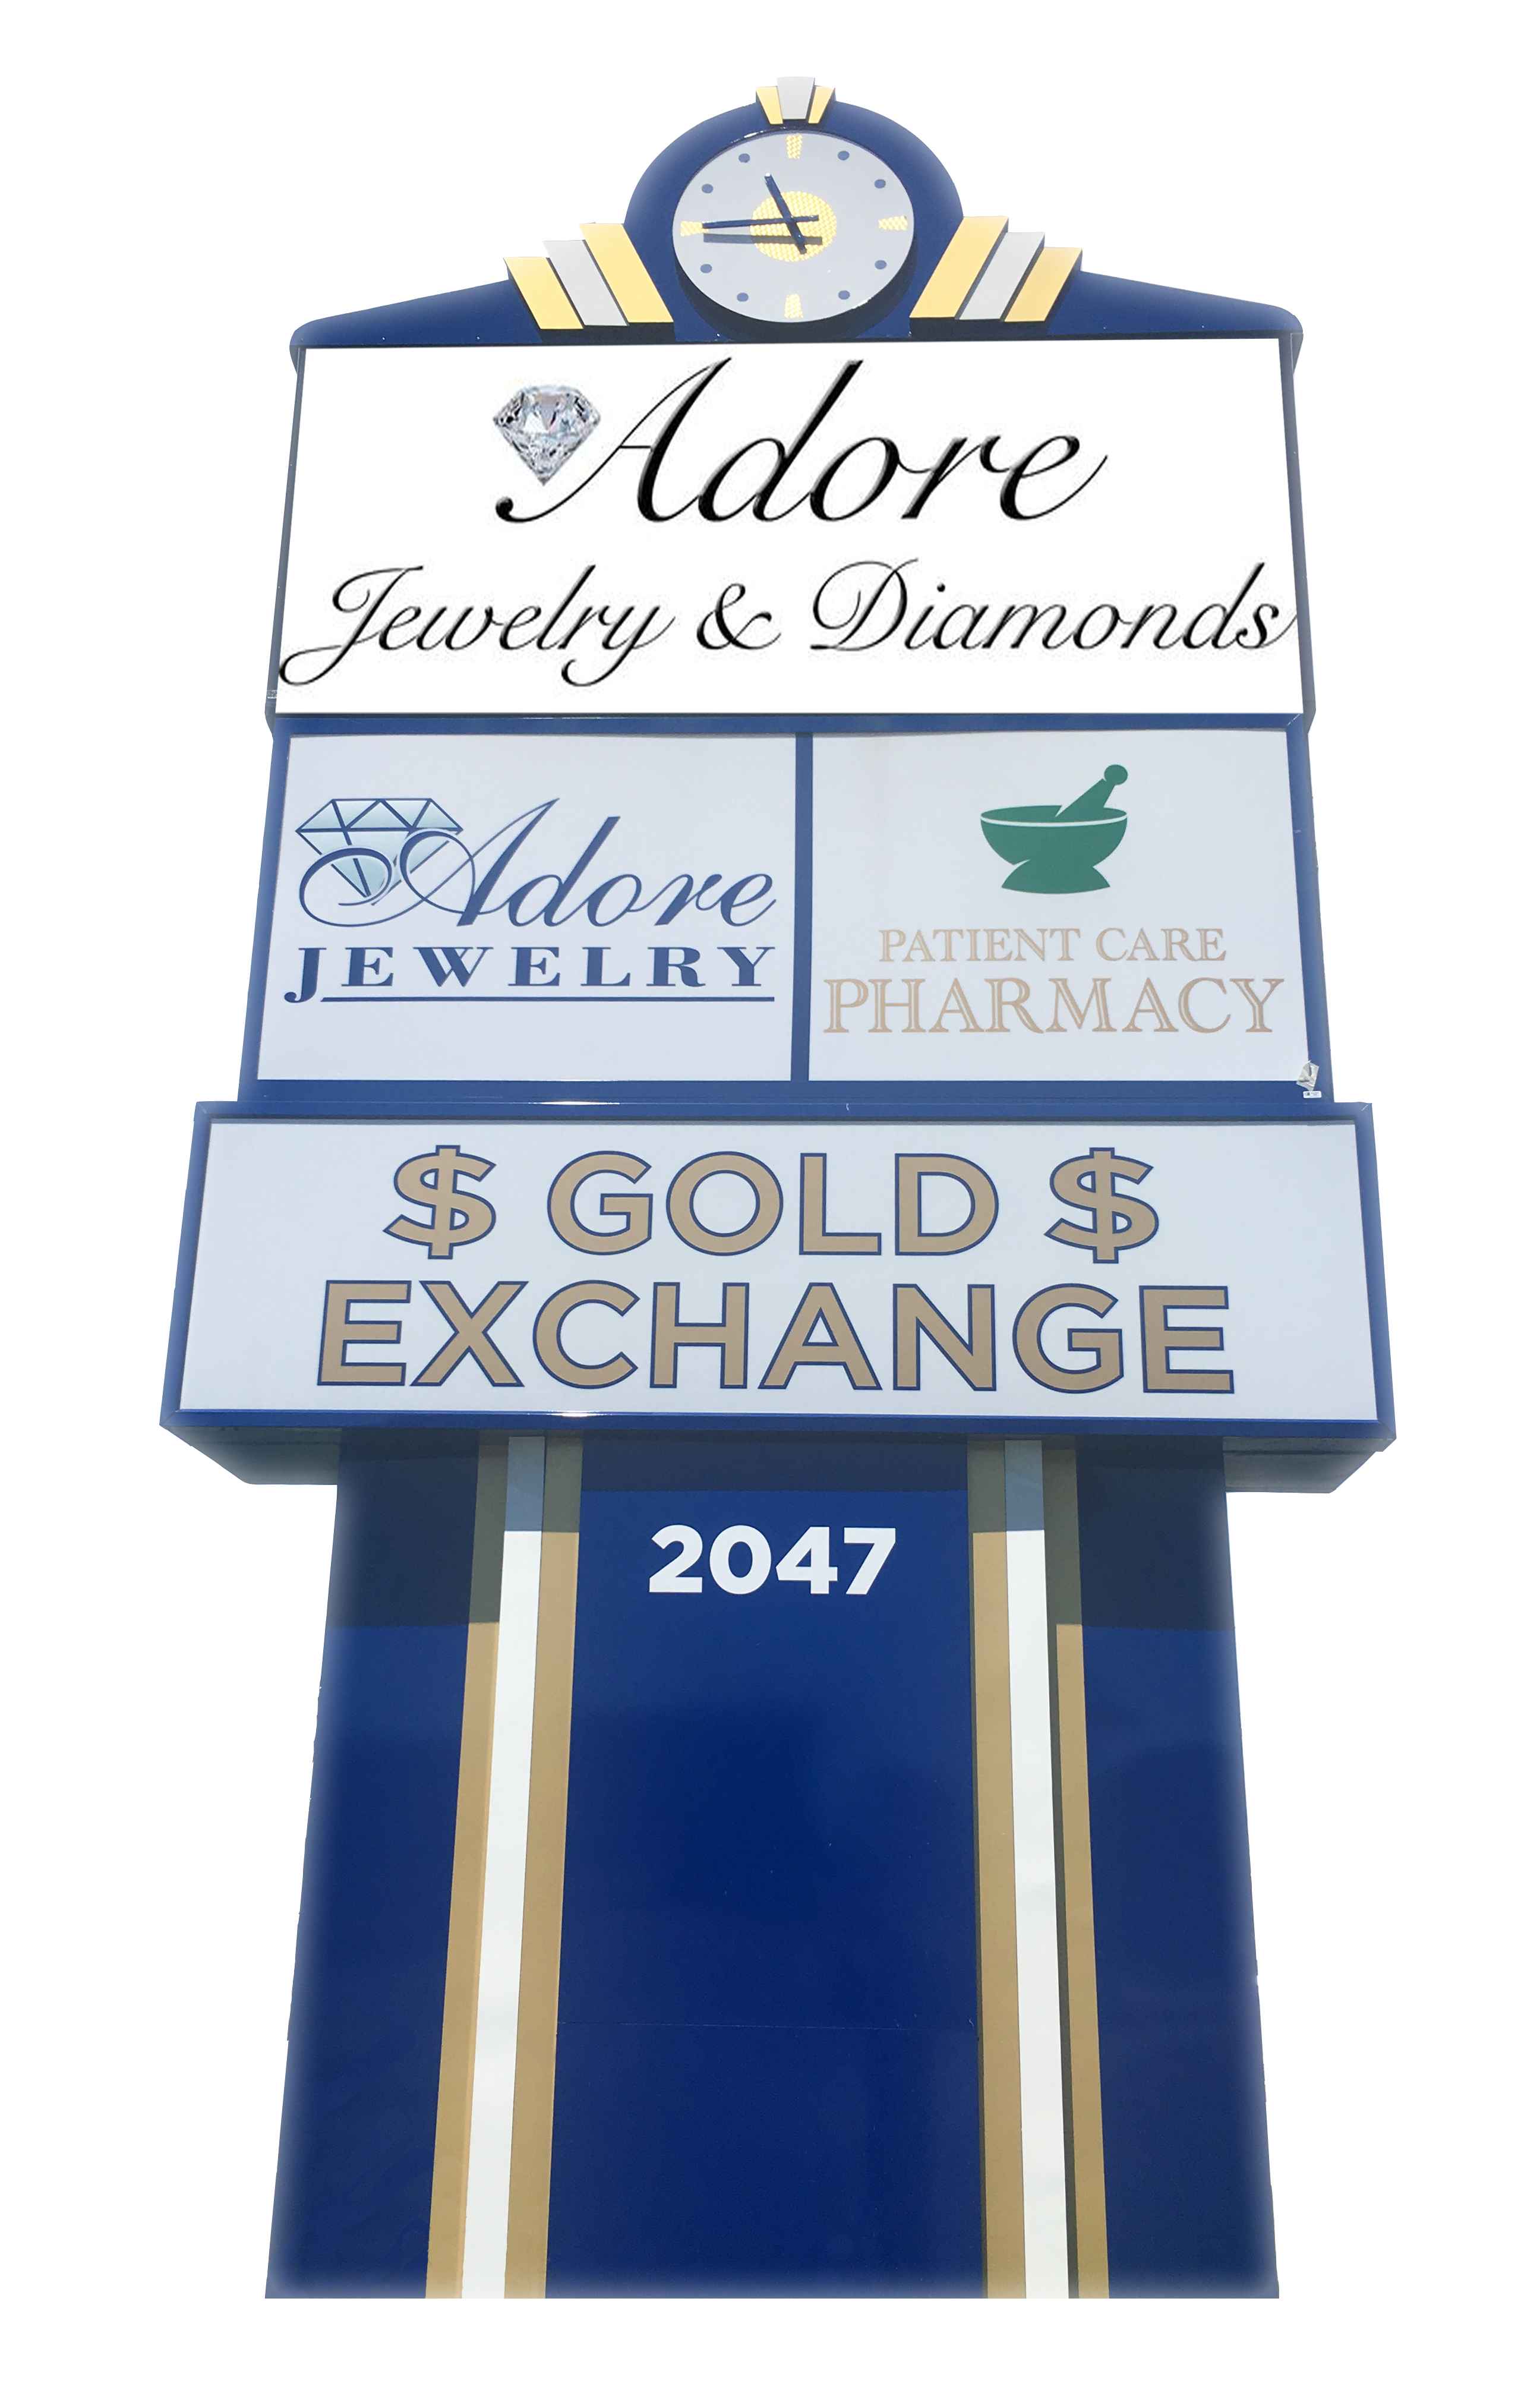 Wholesale jewelry at Adore Jewelry & Diamond Center